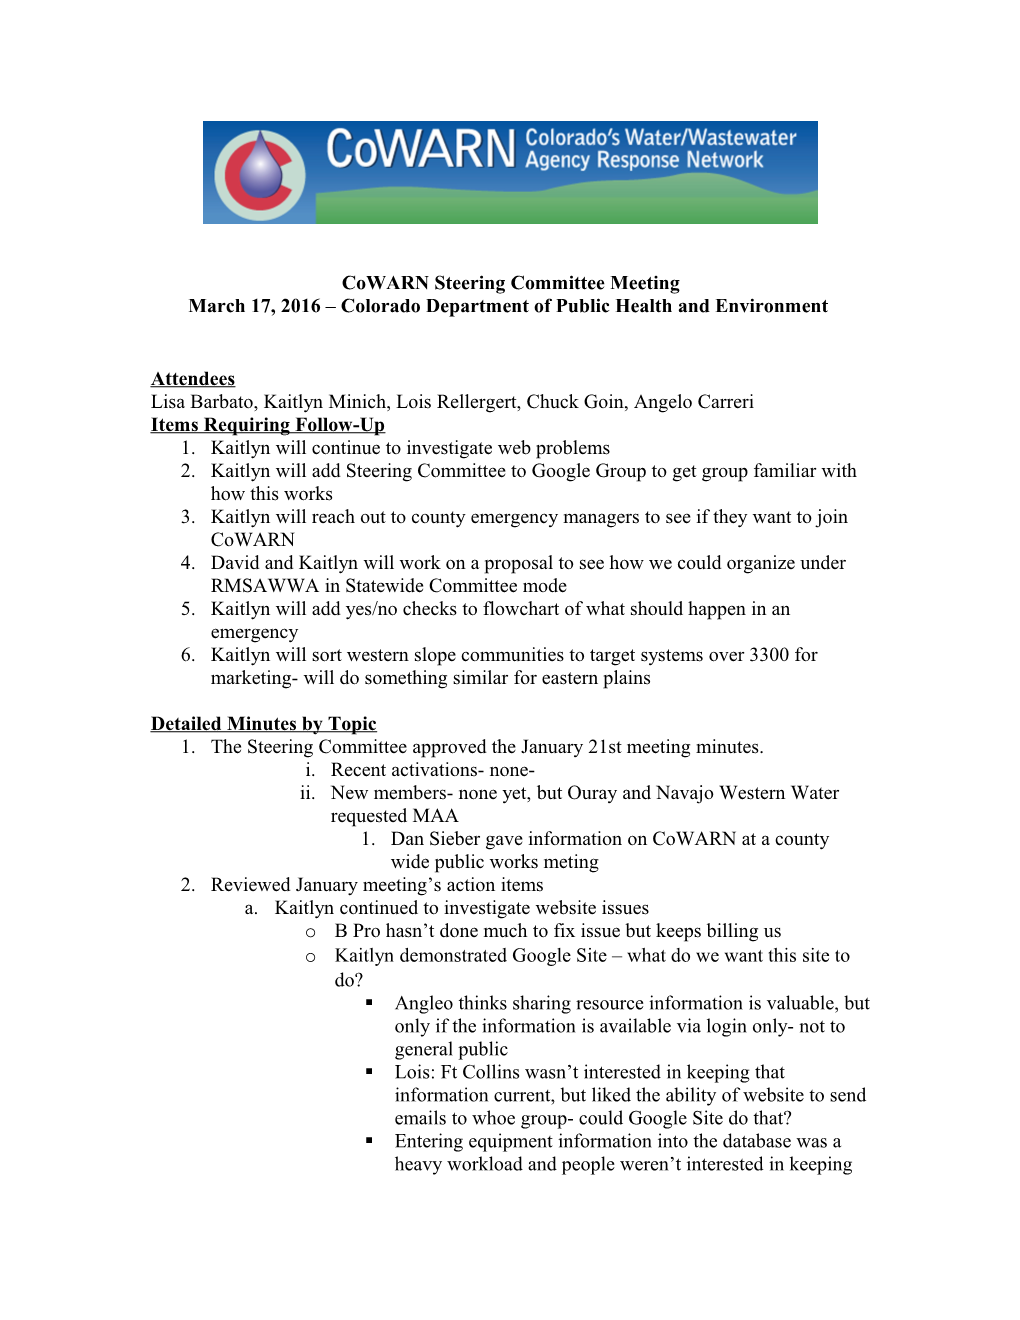 Cowarn Steering Committee Conference Call